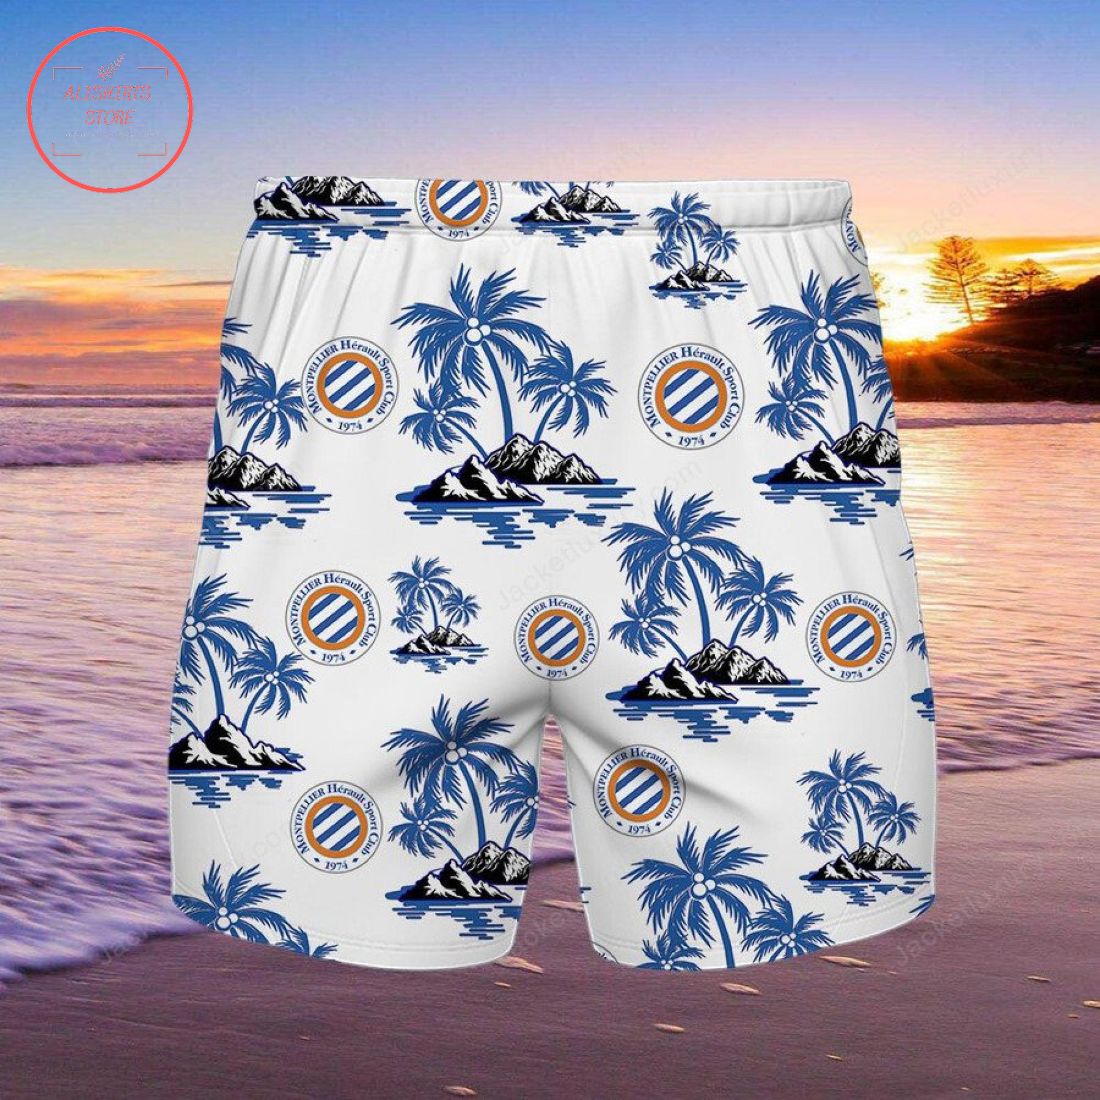 Montpellier HSC Hawaiian Shirt and Shorts